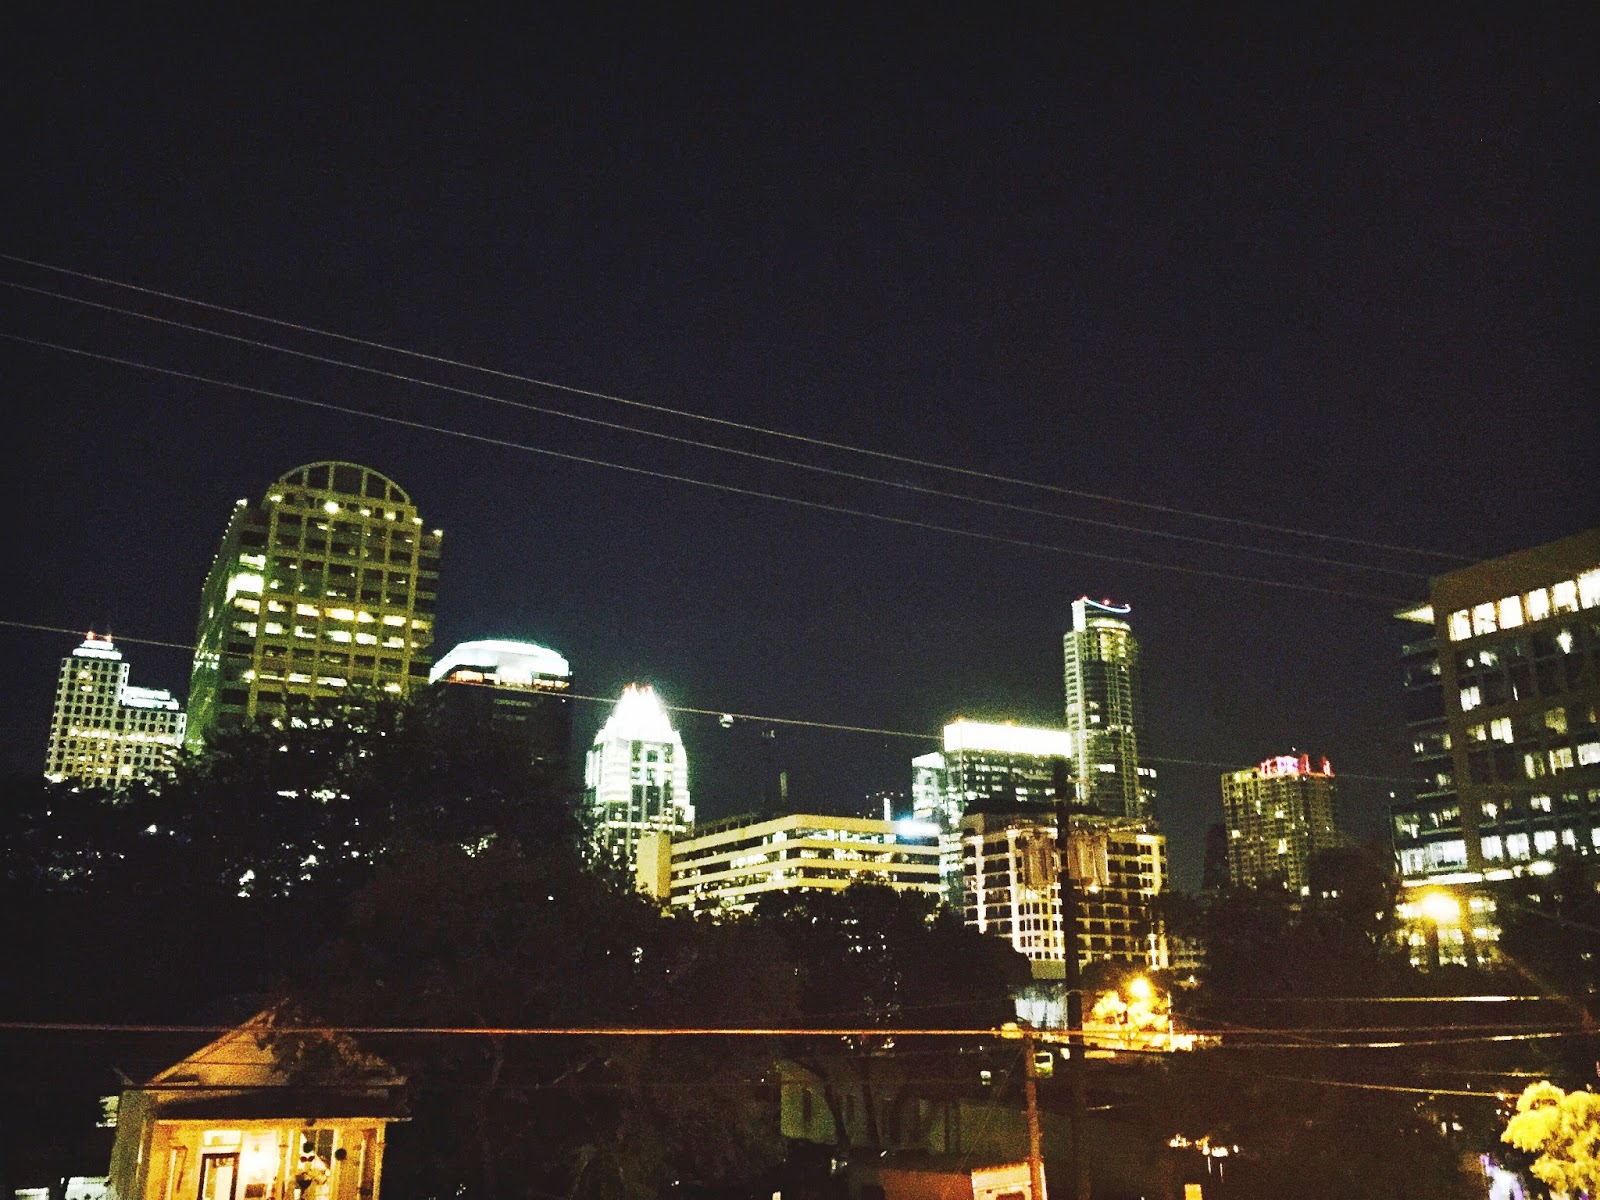 downtown austin, texas at night